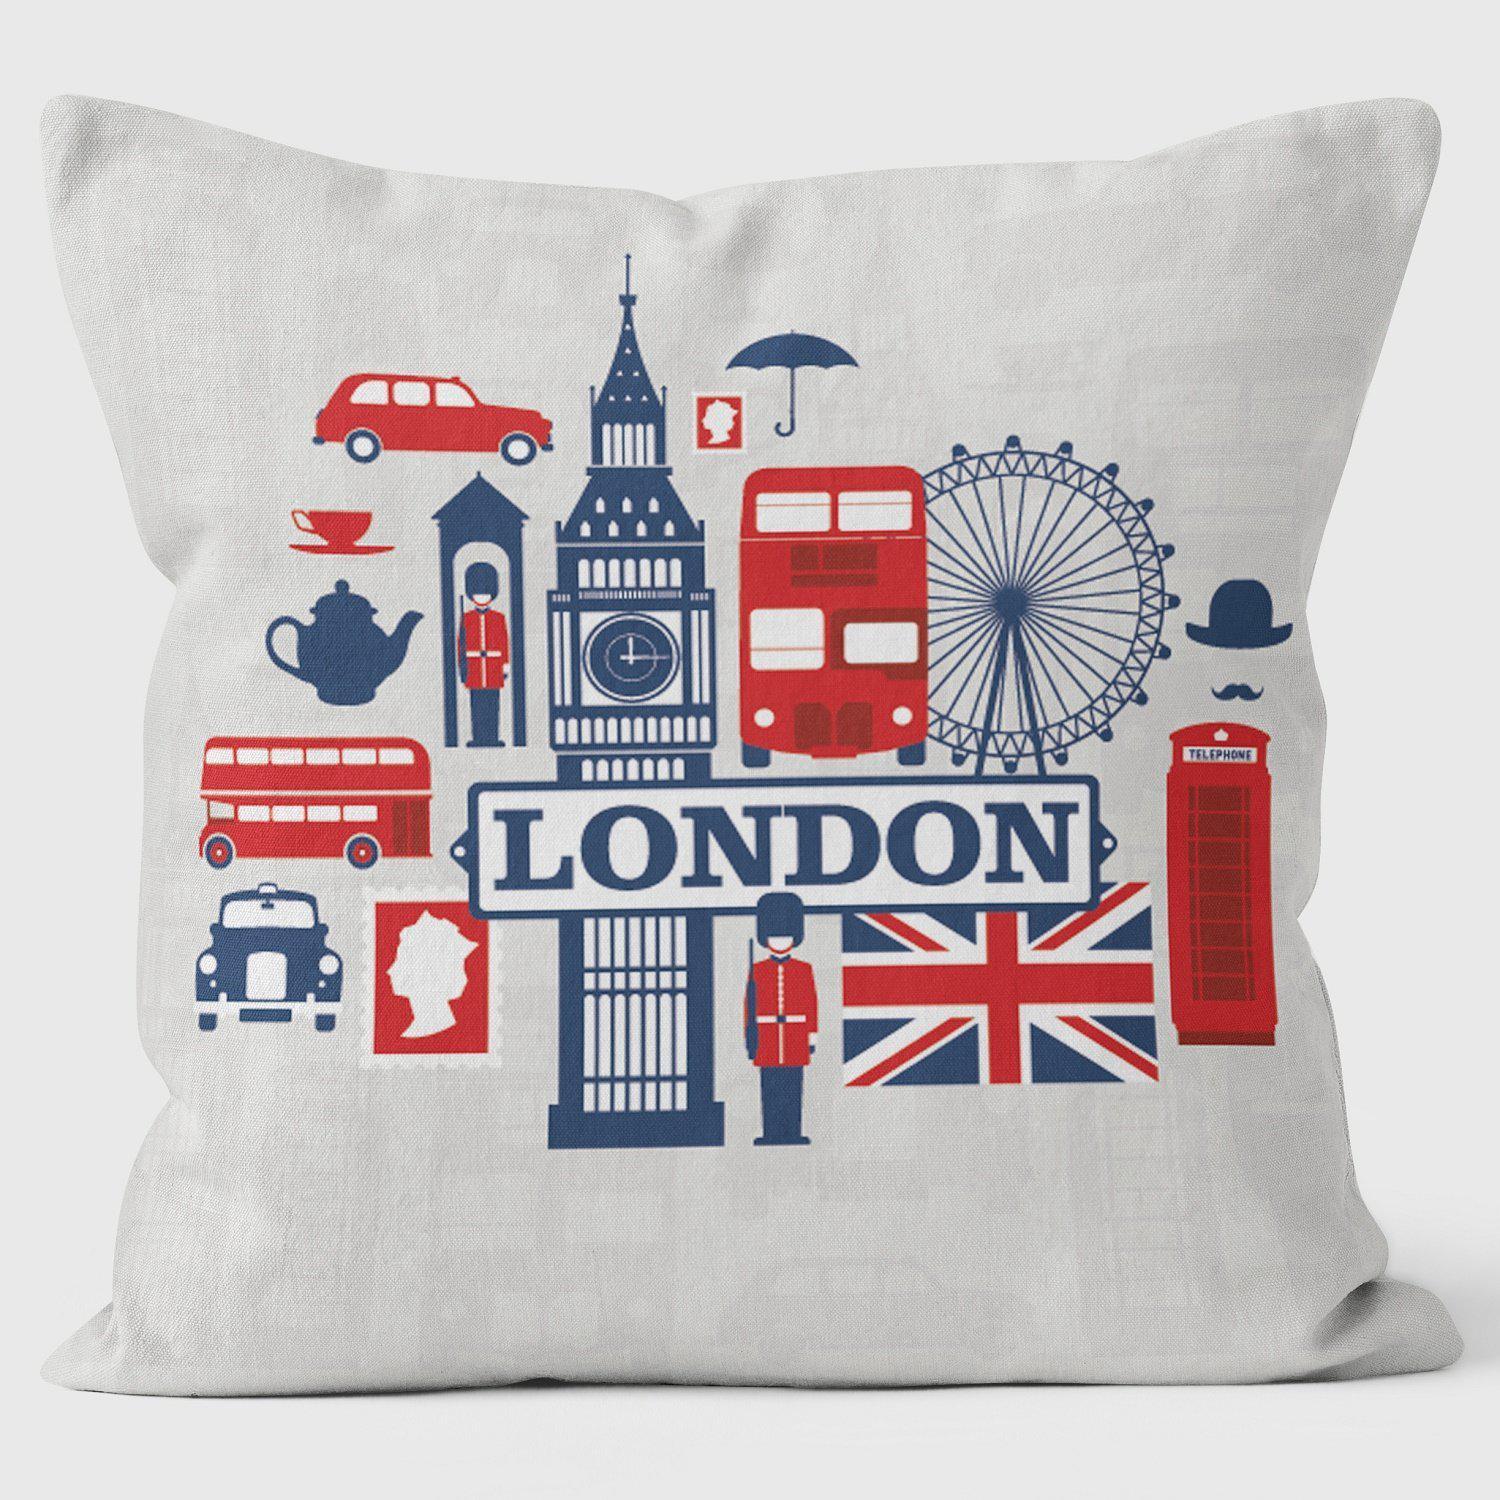 London - Art Print Cushion - Handmade Cushions UK - WeLoveCushions